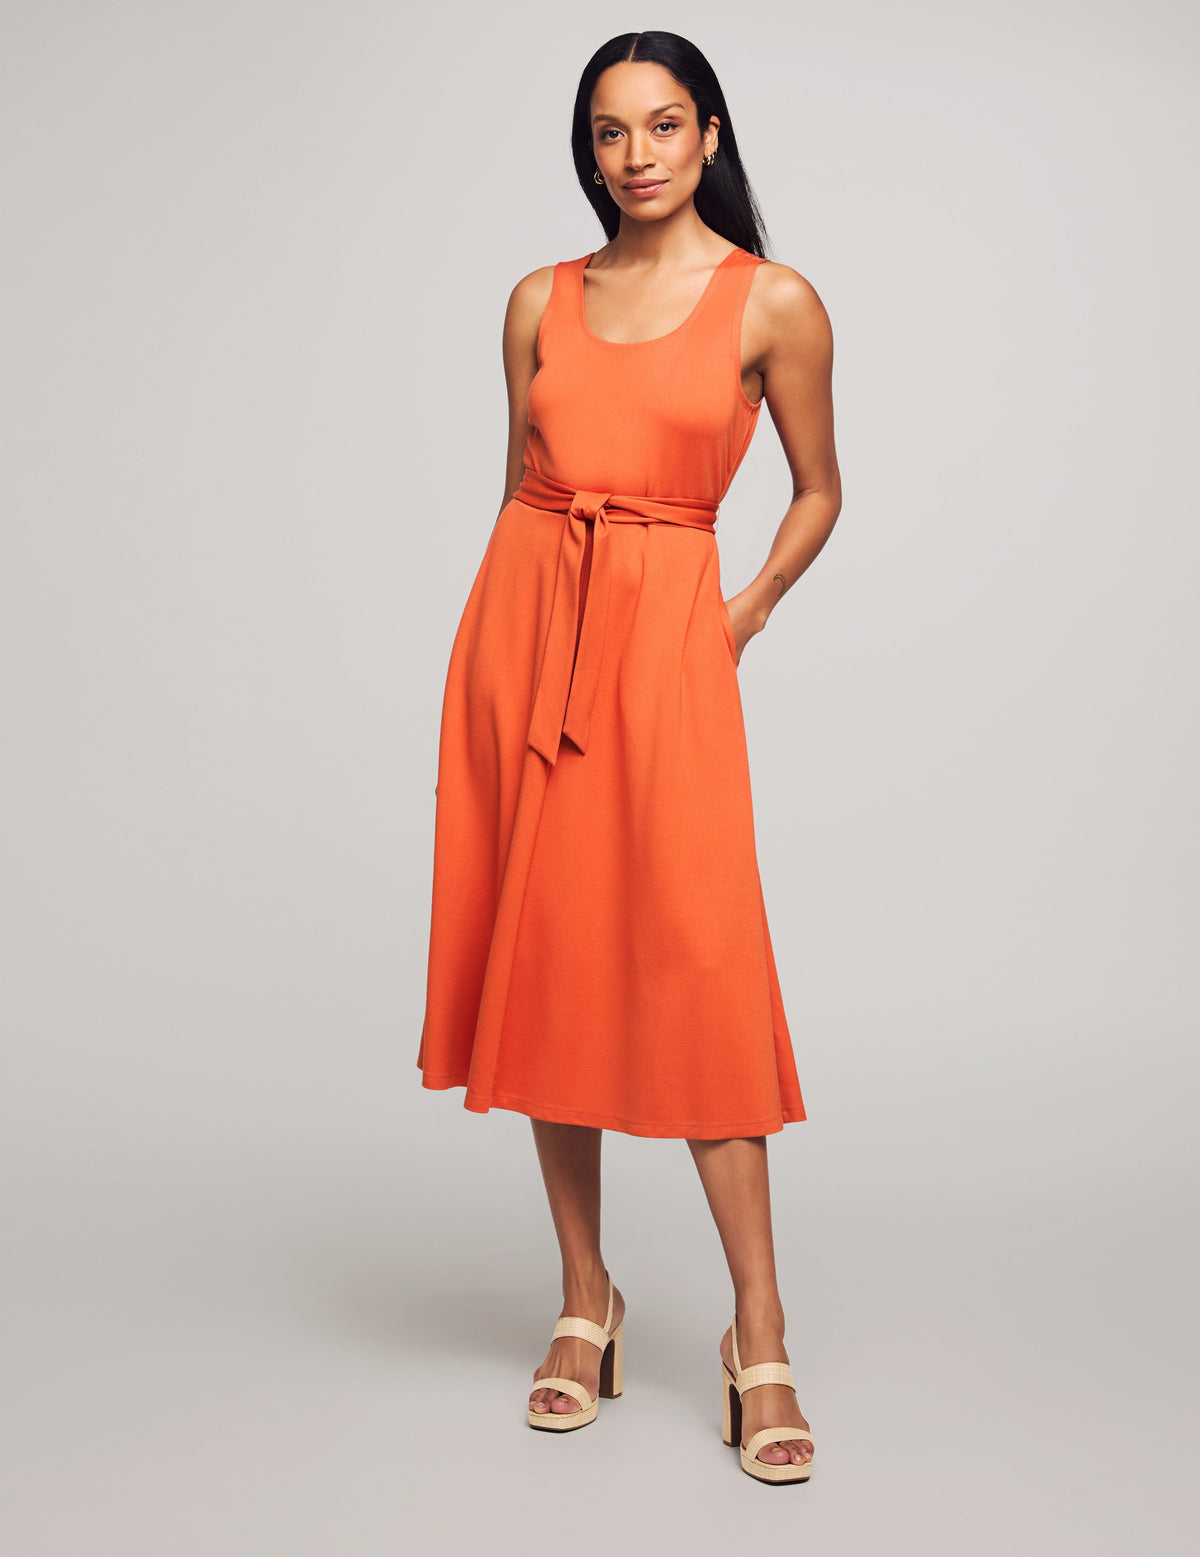 Anne Klein Orange Spice Serenity Knit Tank Dress With Belt- Clearance